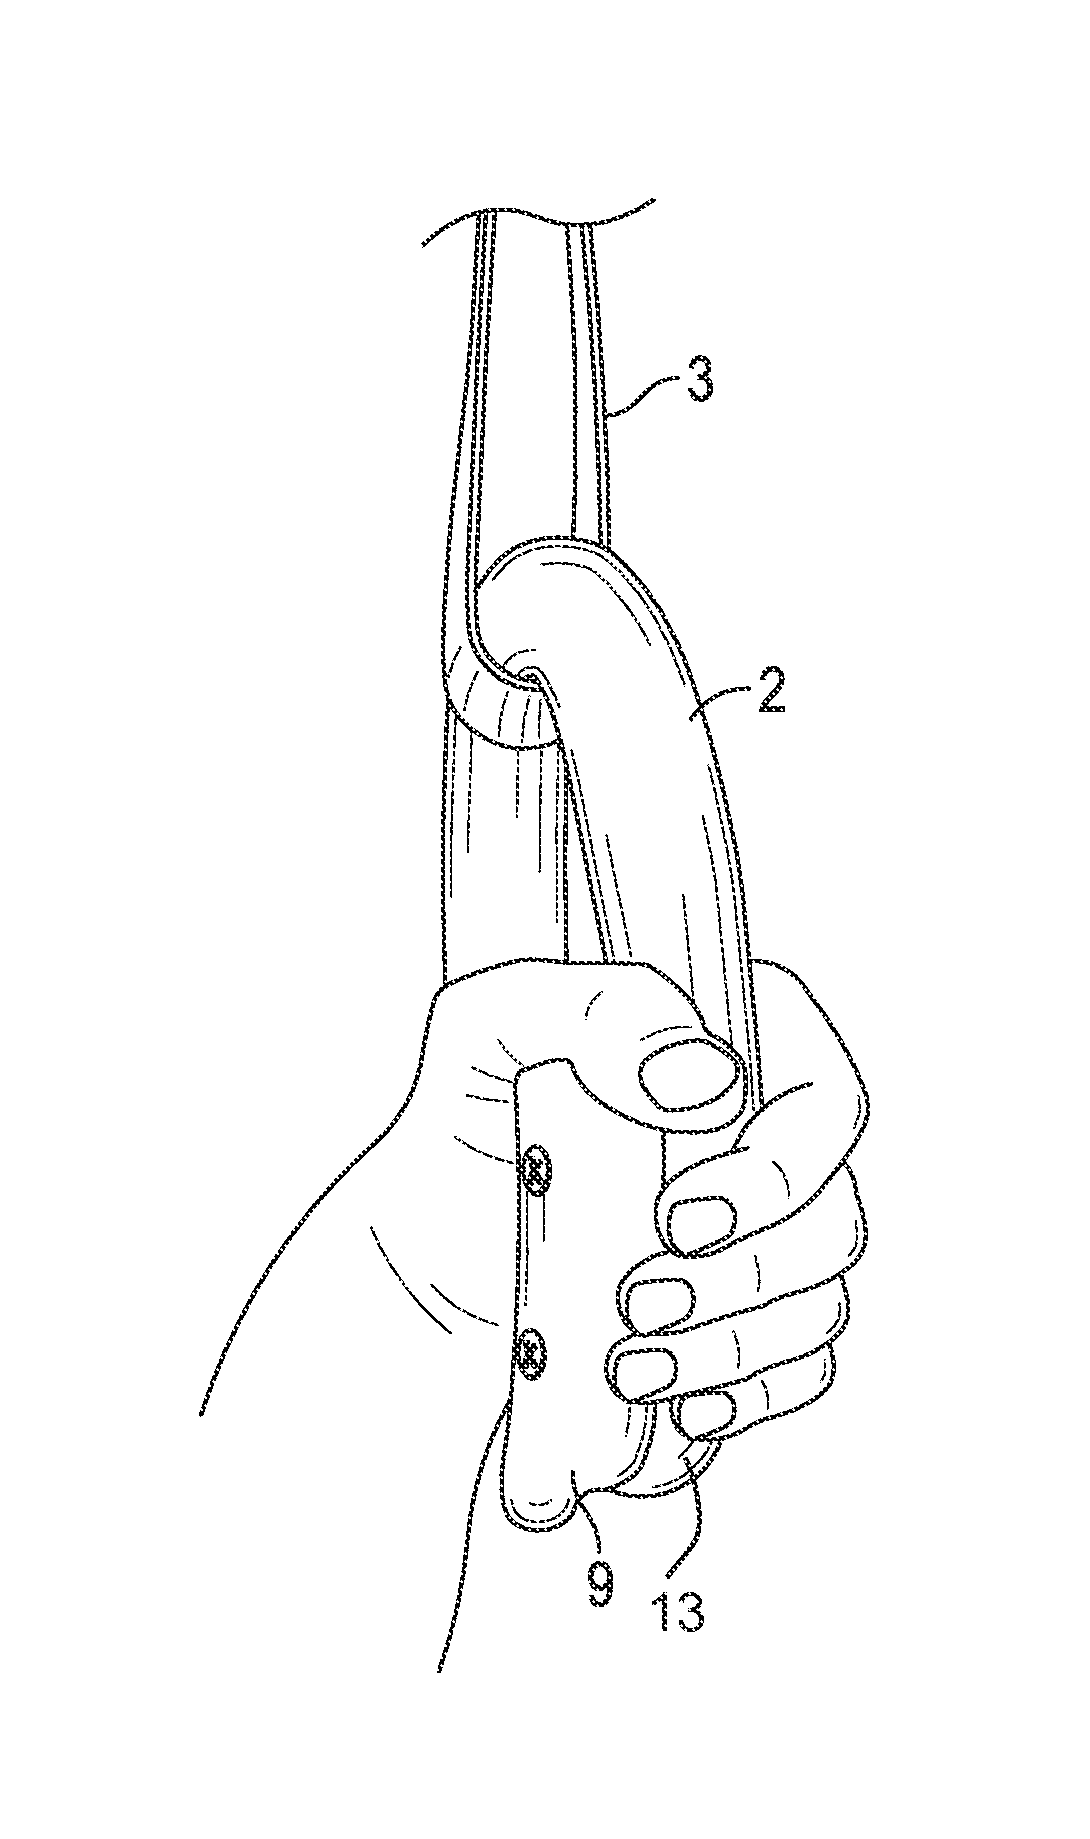 Multi-functional false grip assistance device